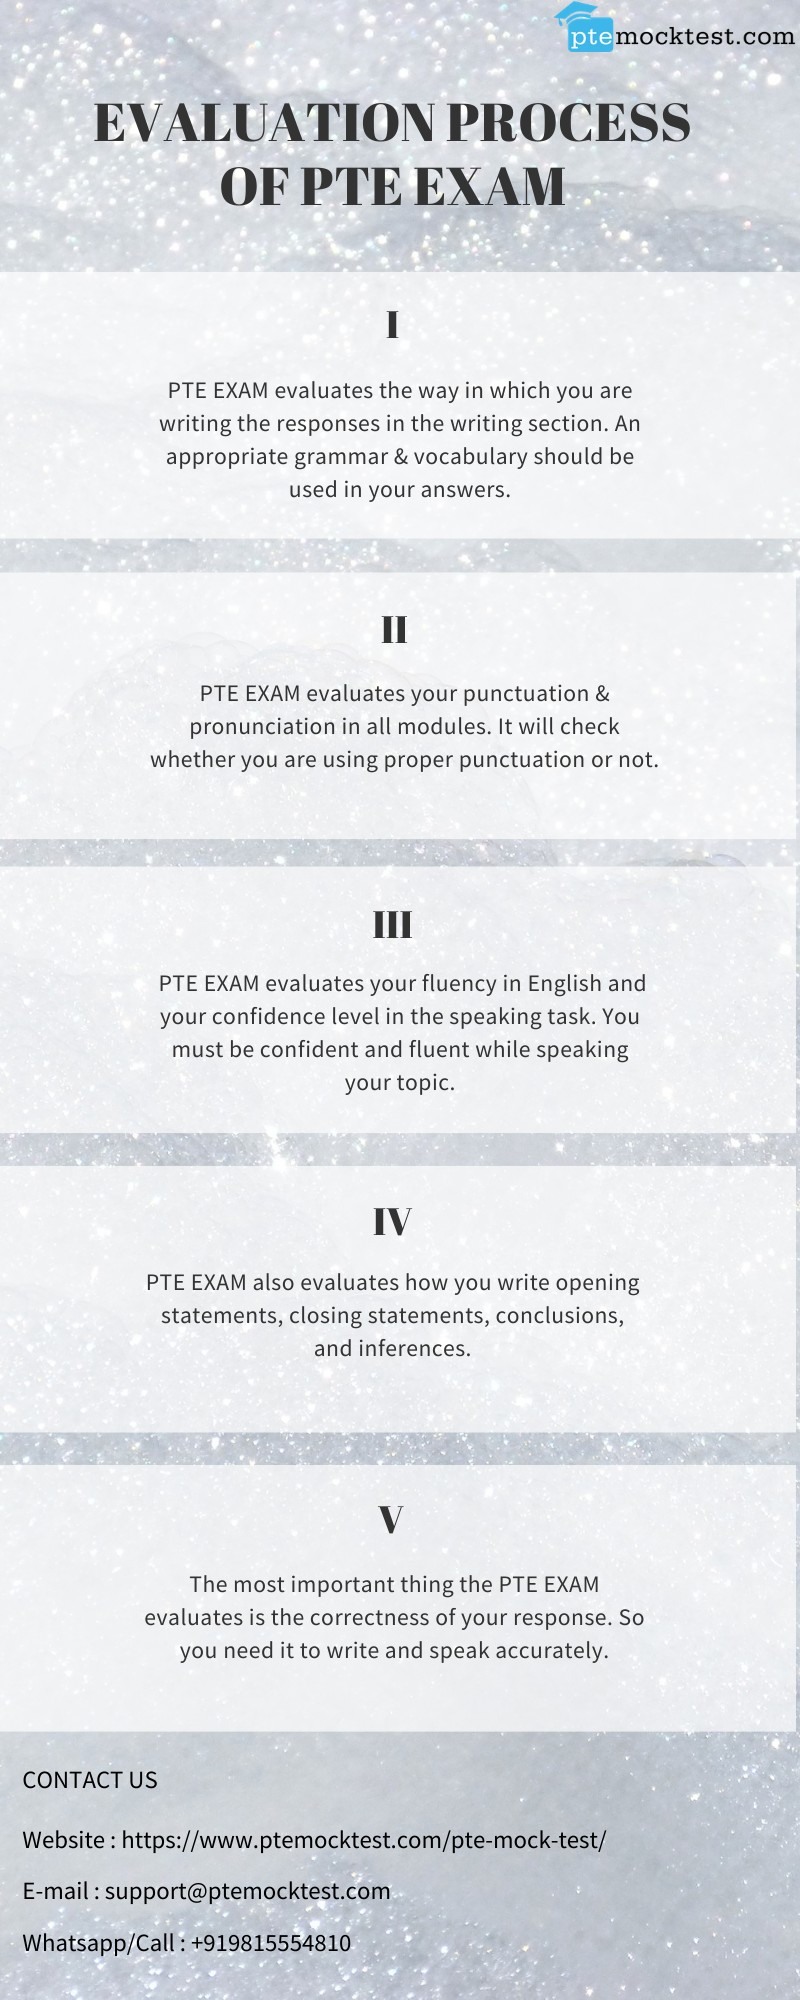 EVALUATION PROCESS OF PTE EXAM